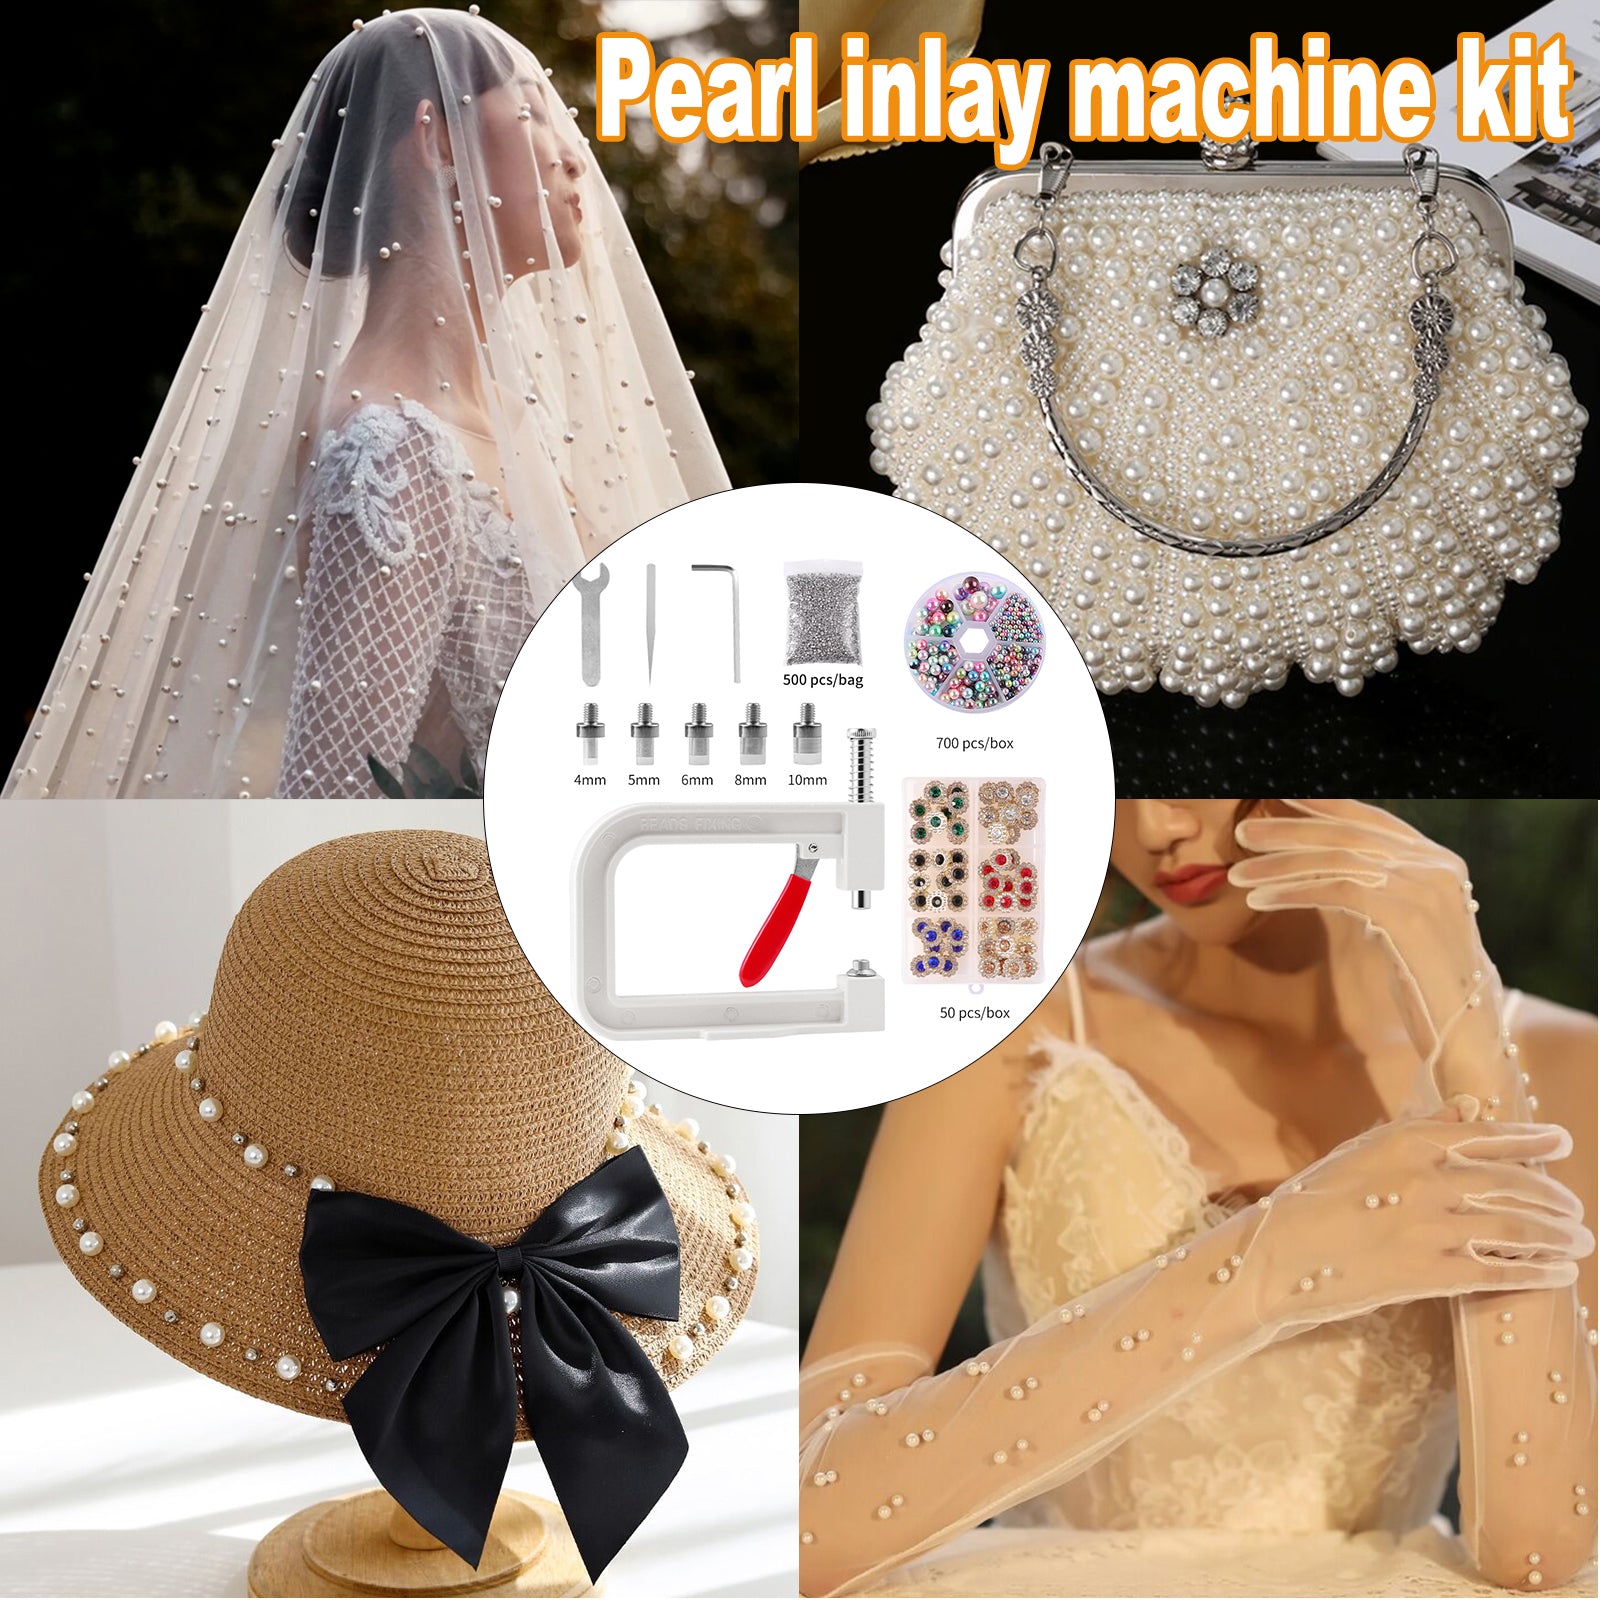 Pearl Inlay Machine Kit